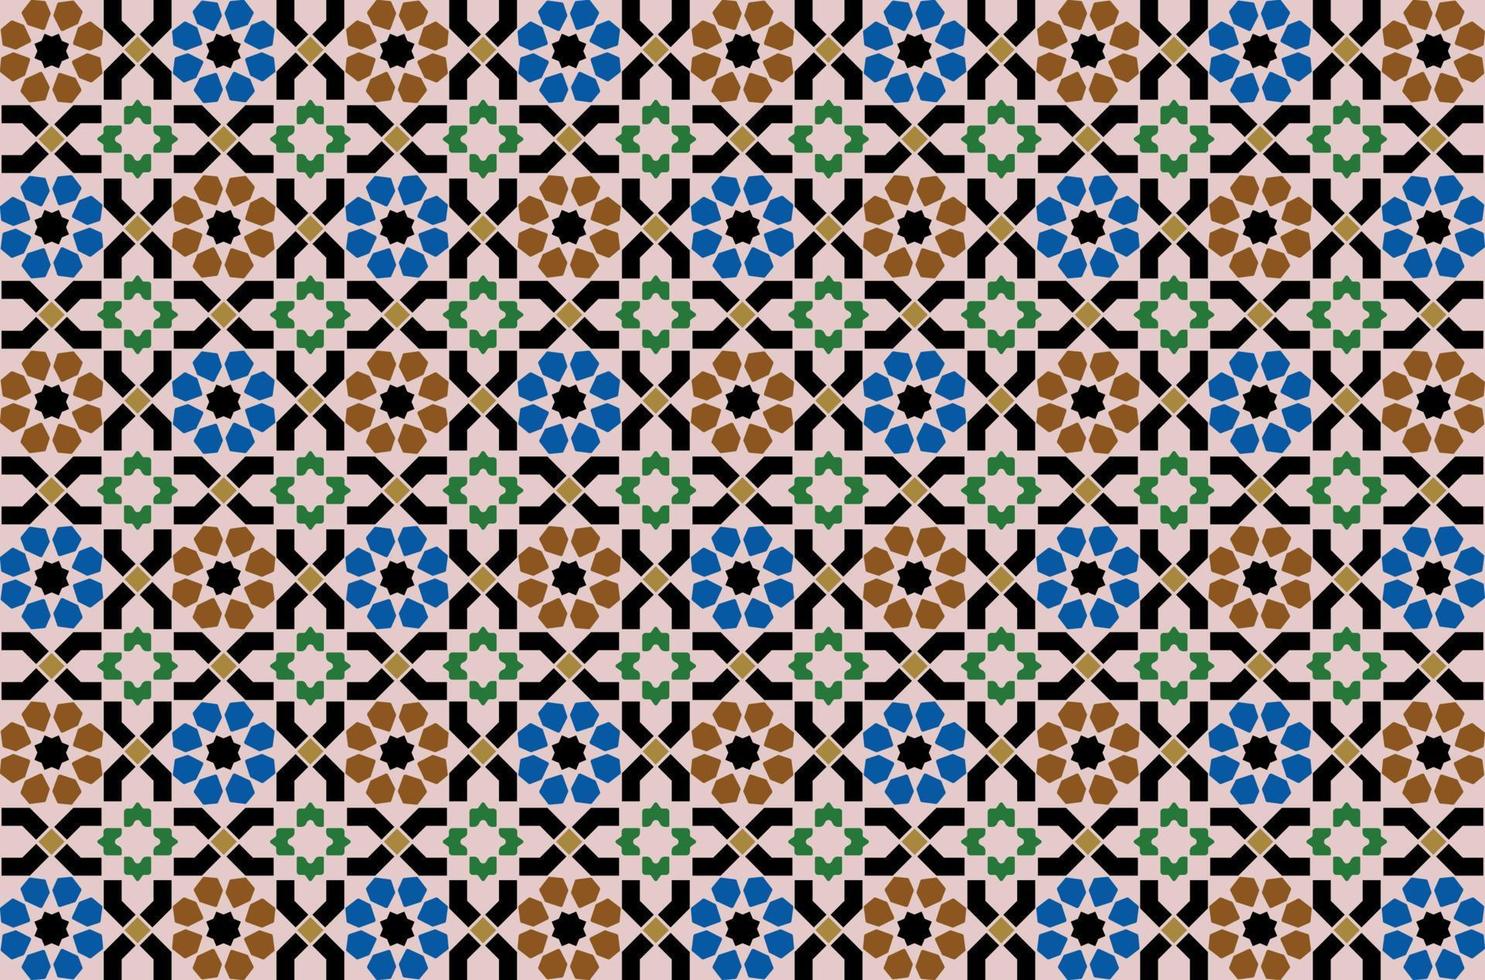 kleurrijke Marokkaanse tegel mozaïek patroon achtergrond vector